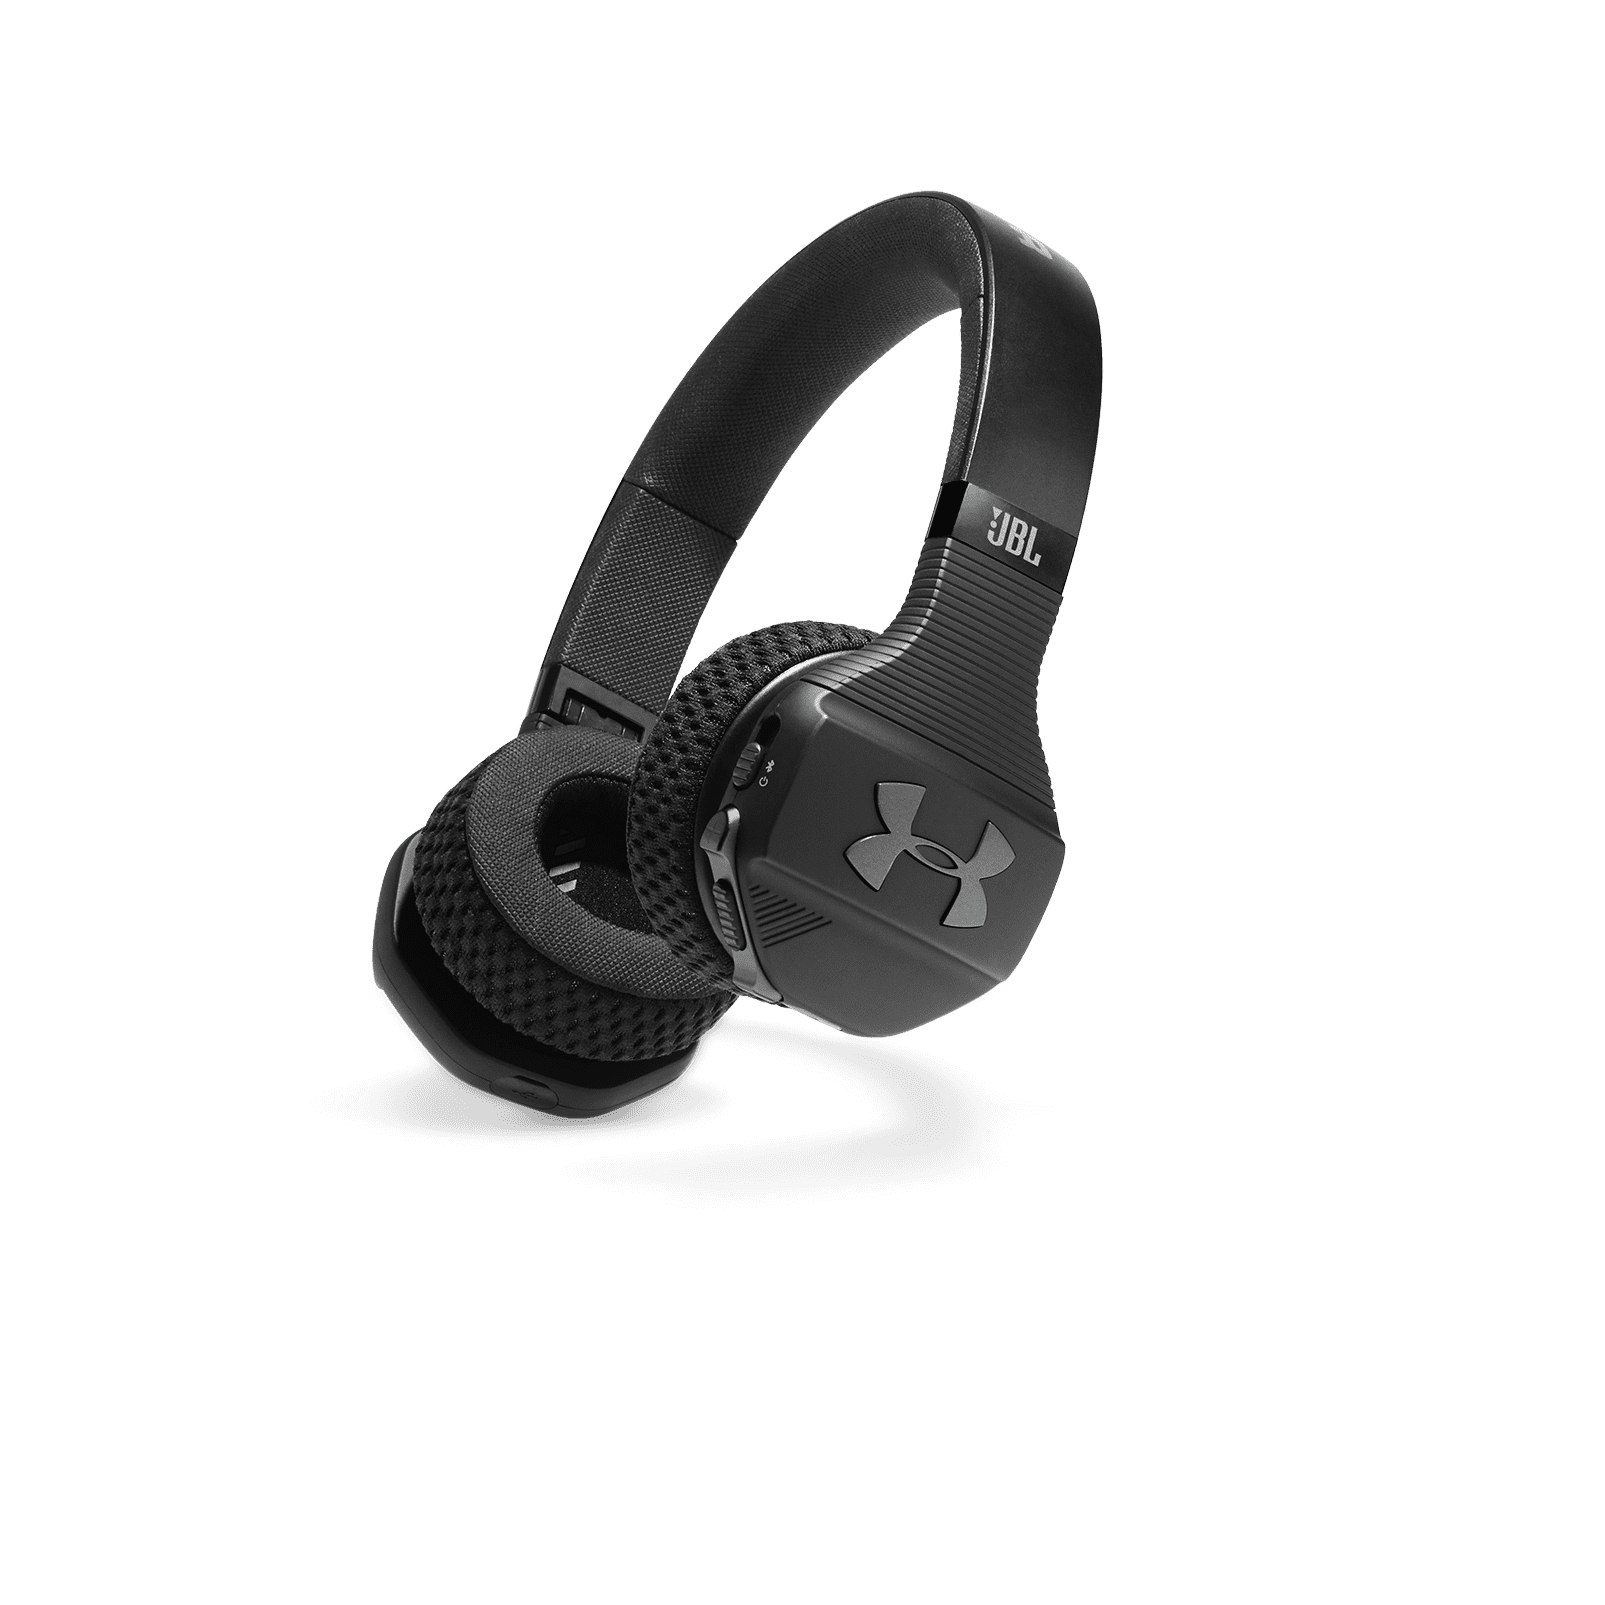 JBL Under Armour Train Wireless Sport Earphones, Black (Refurbished)